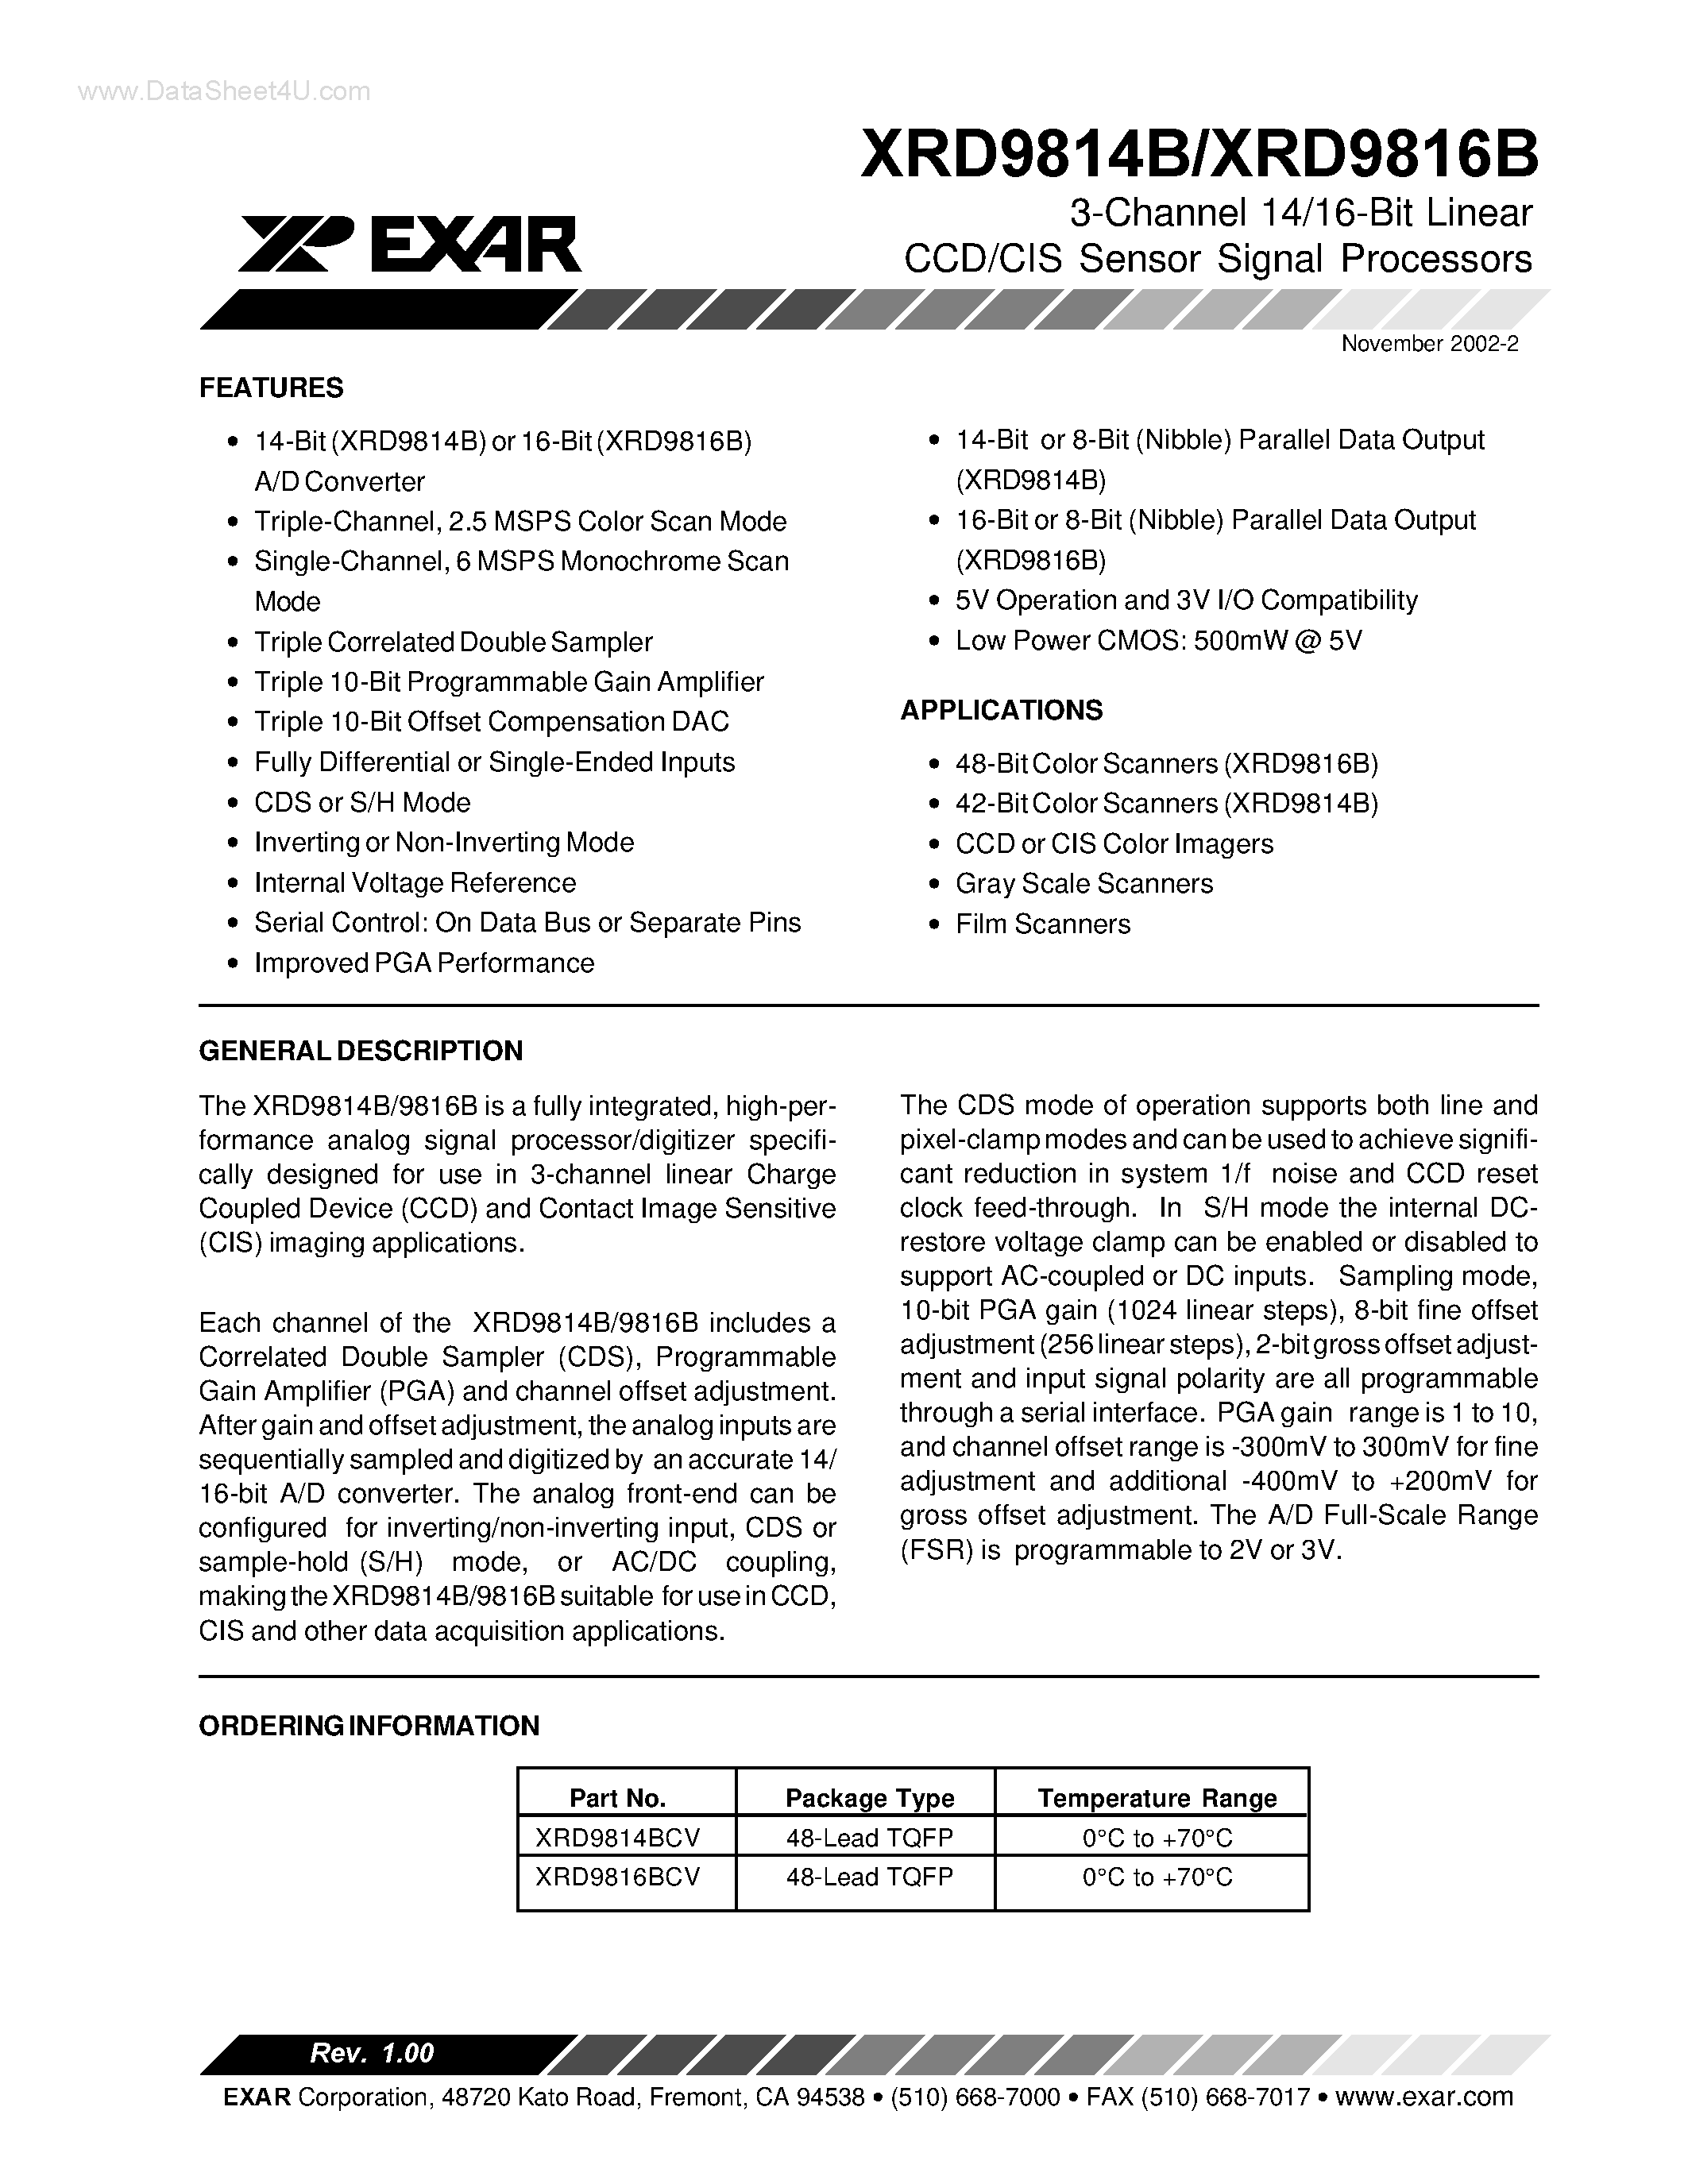 Даташит XRD9814B - (XRD9814B / XRD9816B) 3-Channel 14/16-Bit Linear CCD/CIS Sensor Signal Processors страница 1